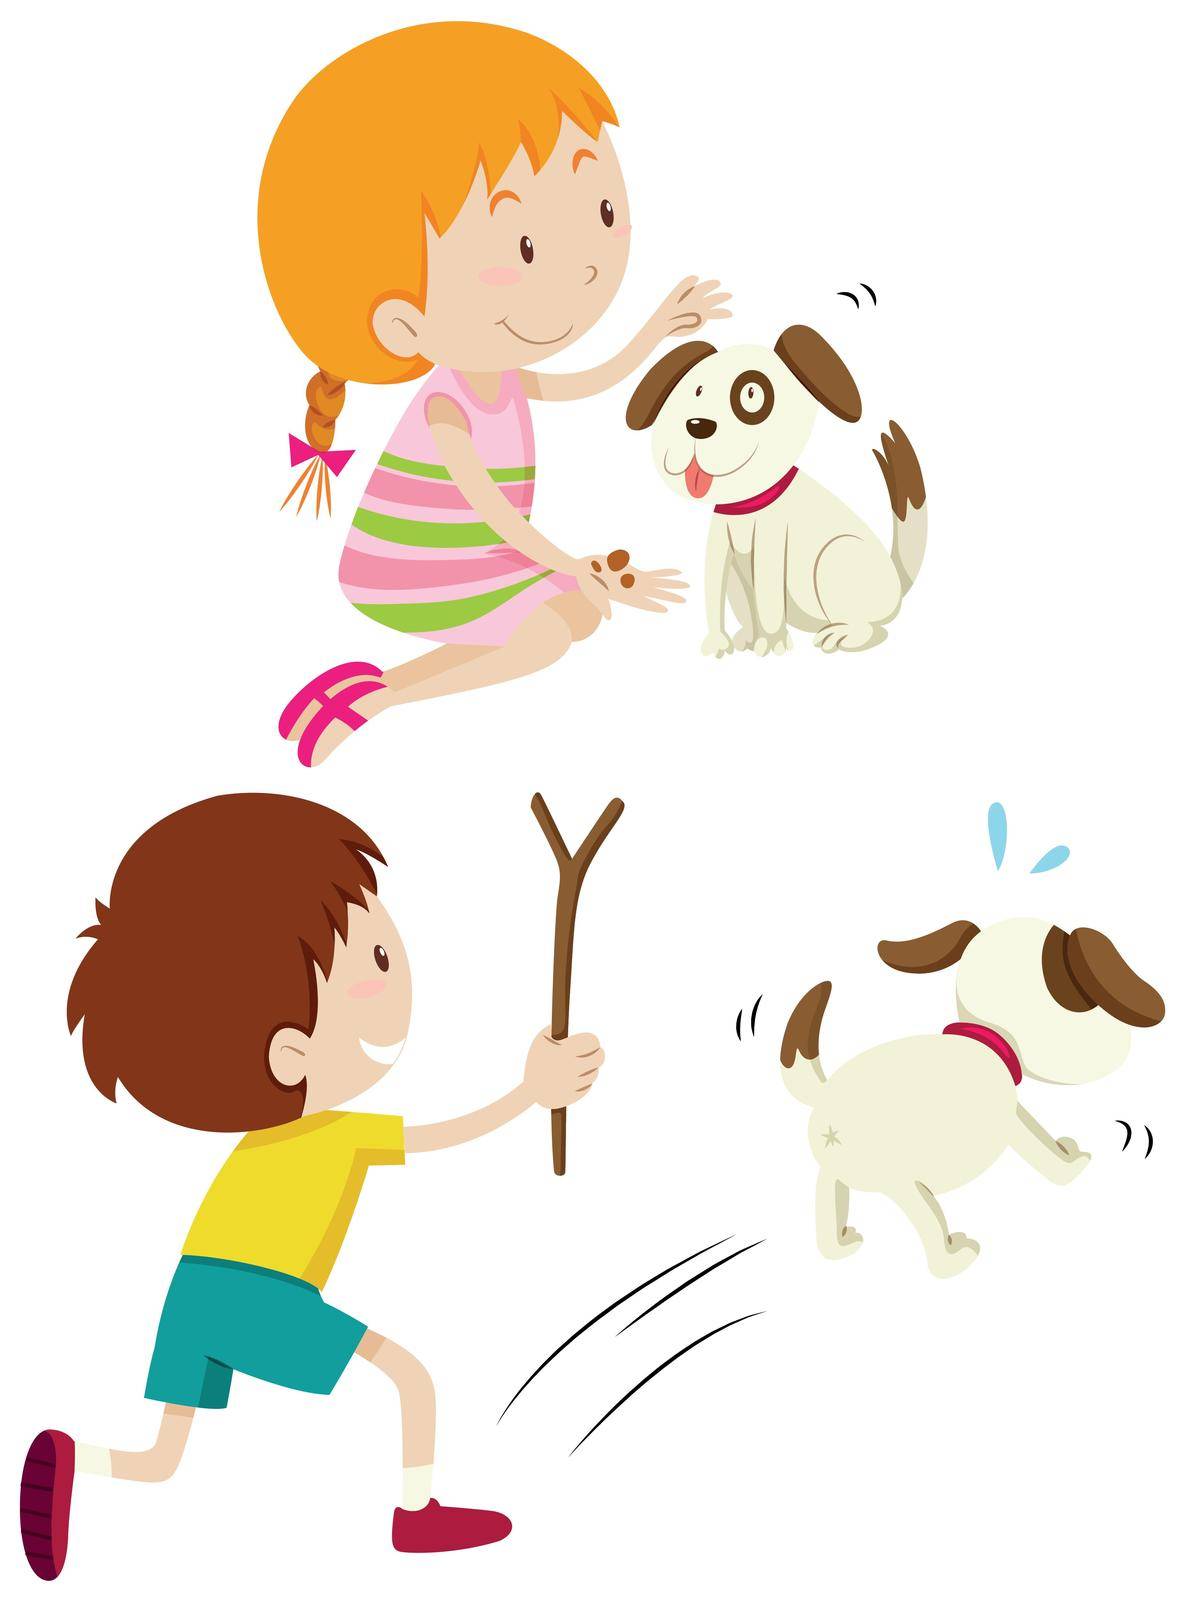 Girl feeding dog and boy chasing dog illustration